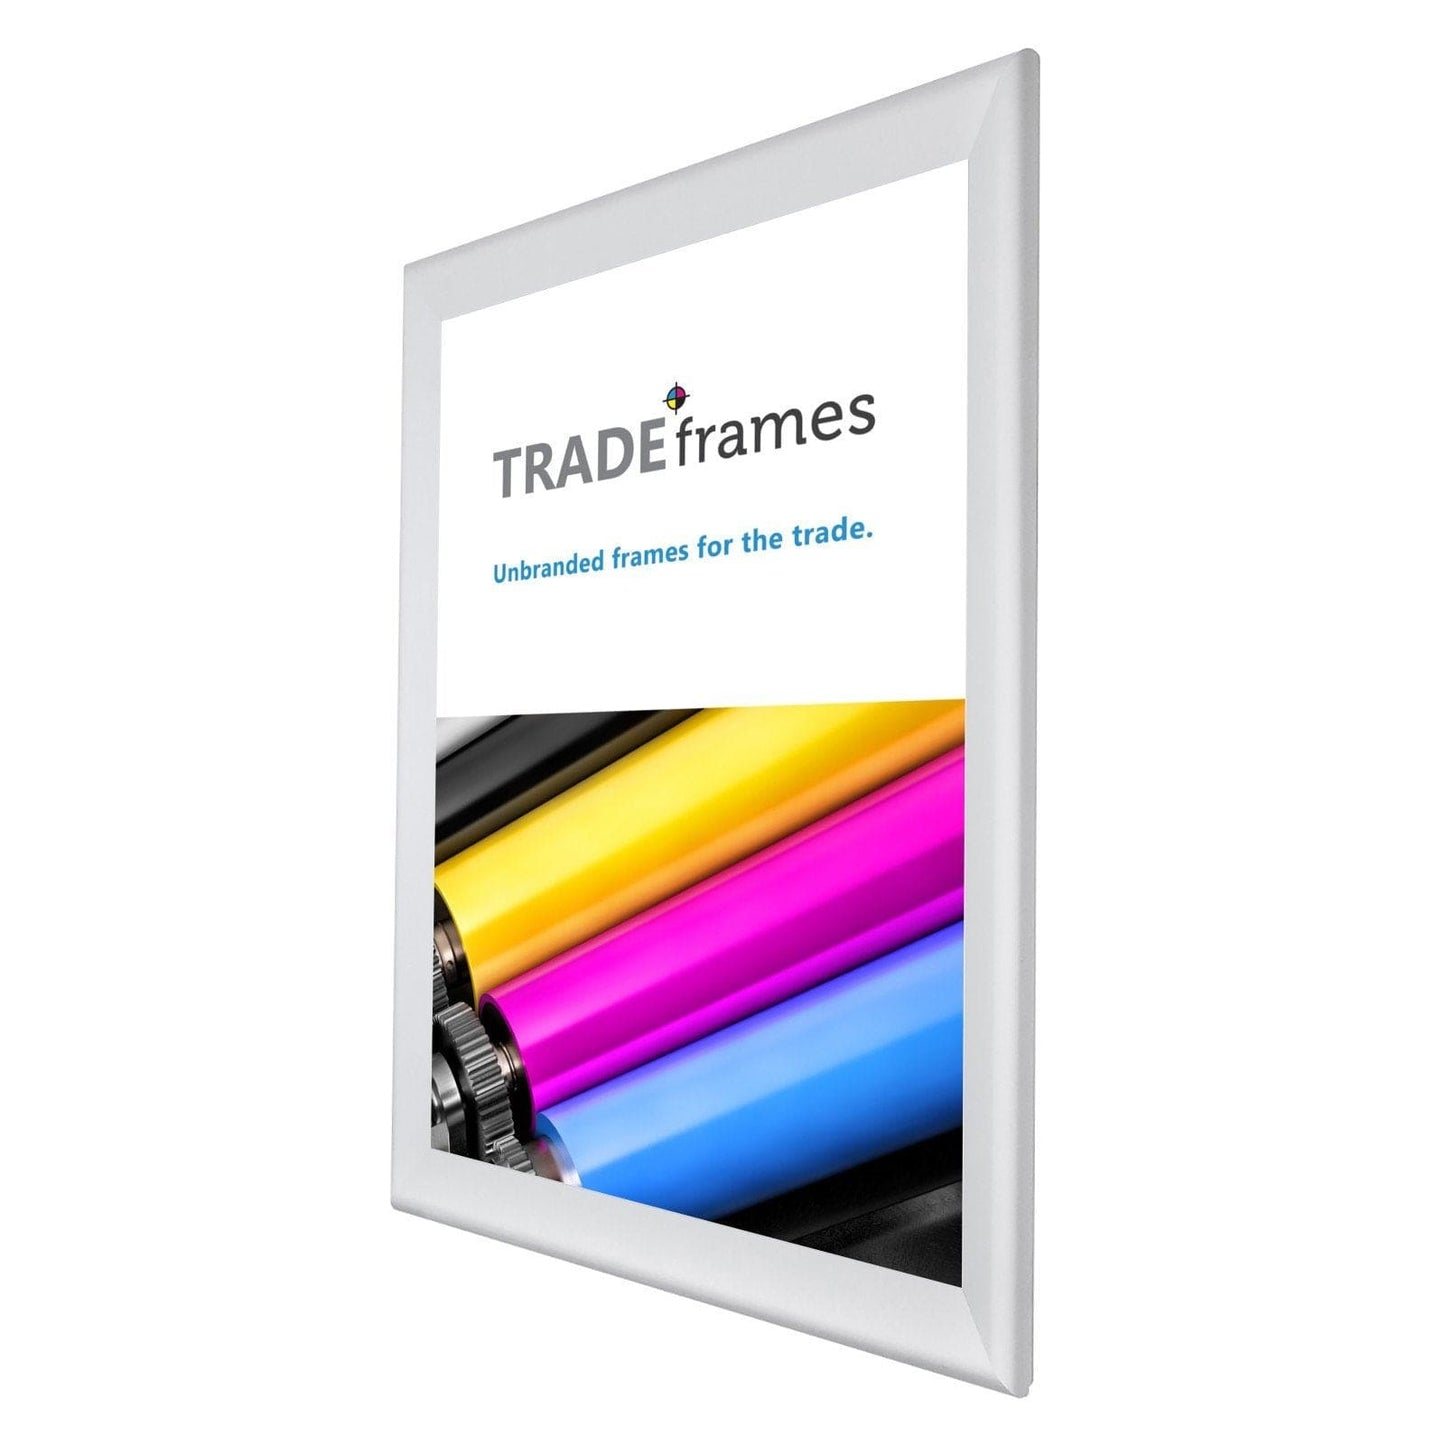 24x36 Silver TRADEframe Snap Frame - 1.7" Profile - Snap Frames Direct